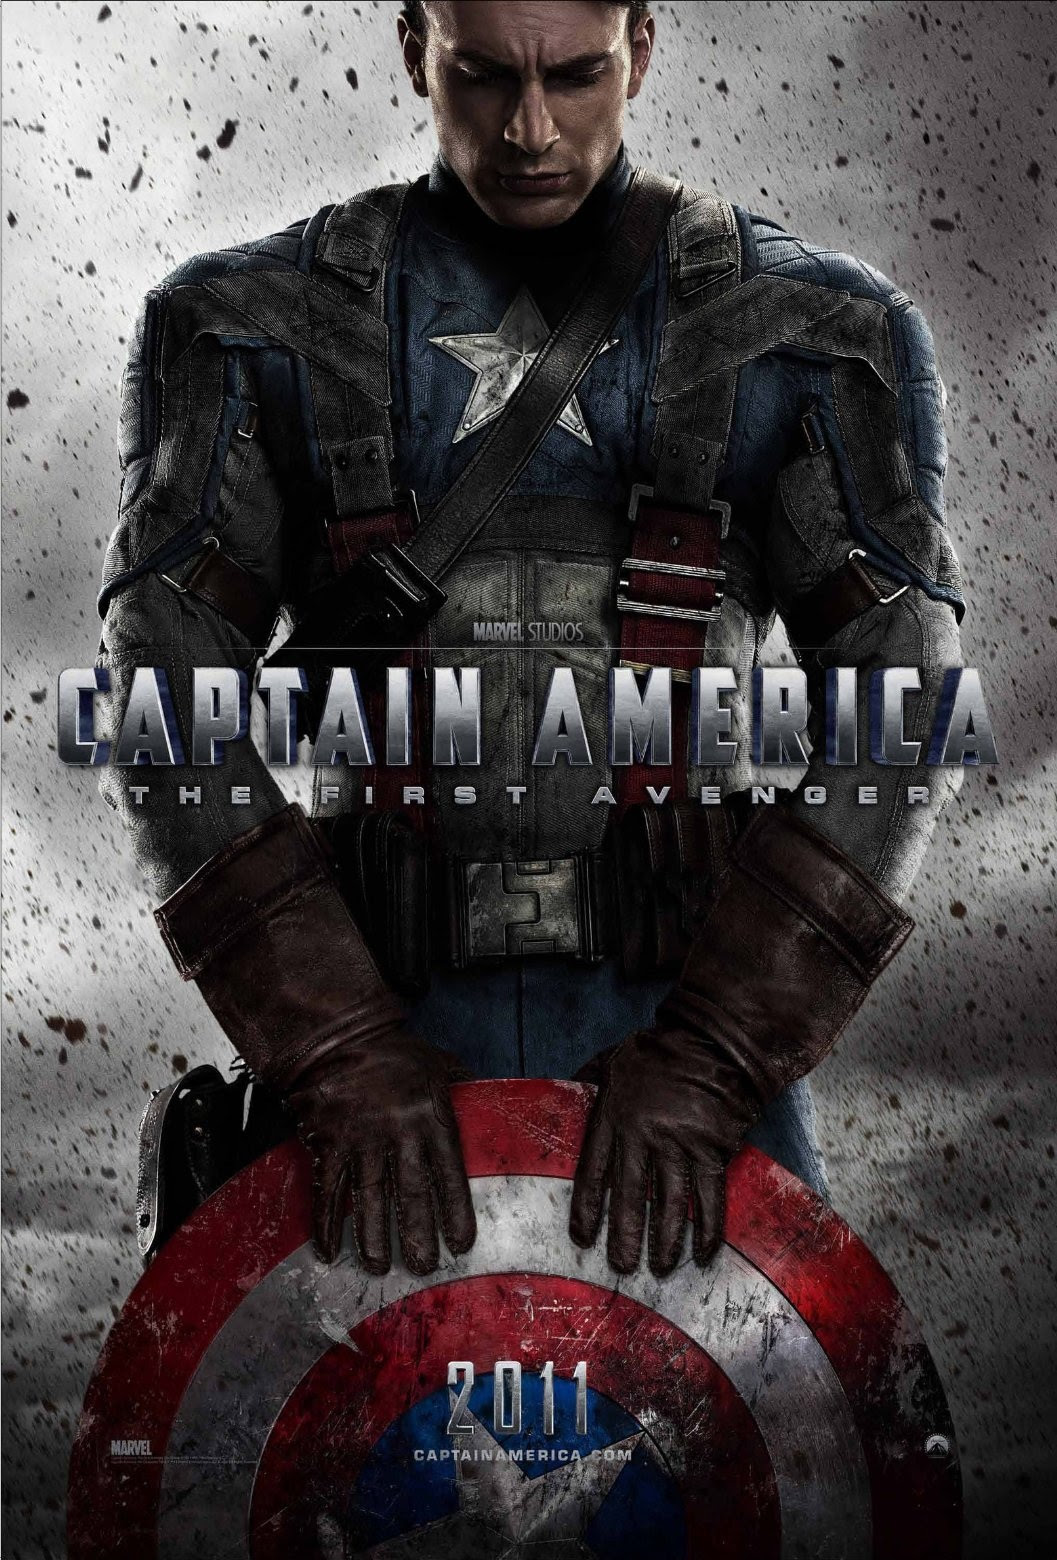 Captain America title banner